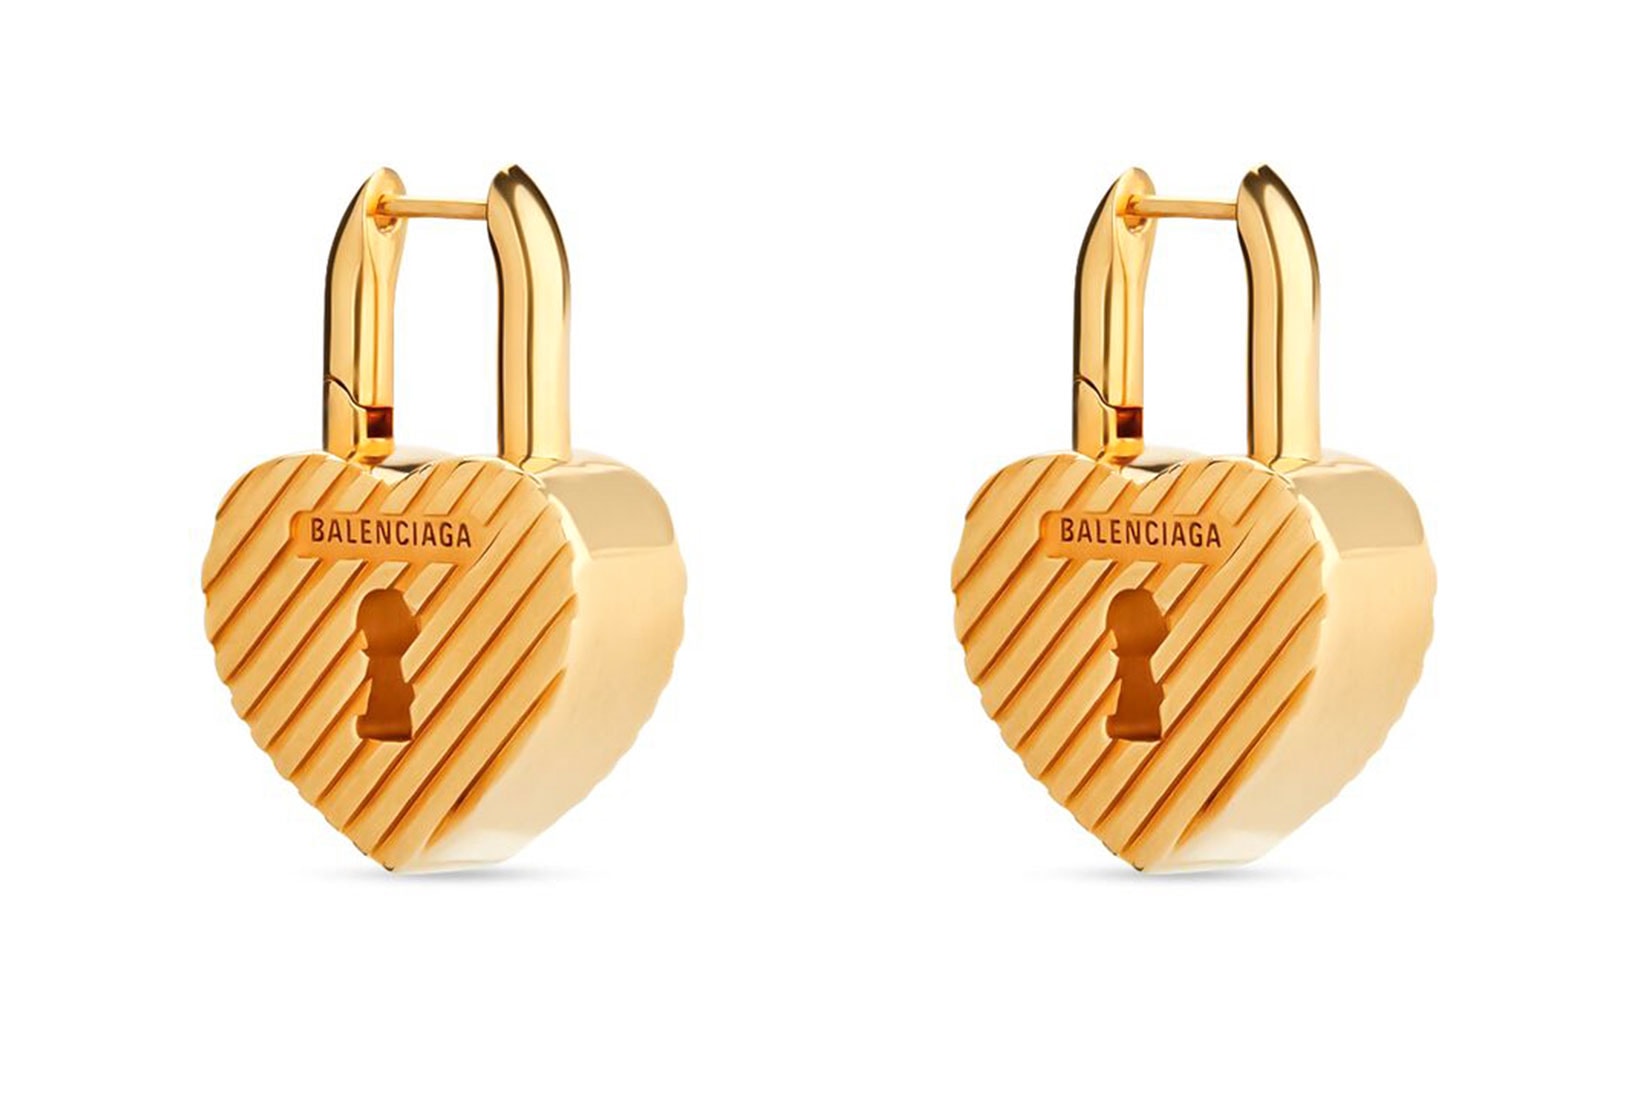 Balenciaga Valentine's Day Heart Lock Earrings